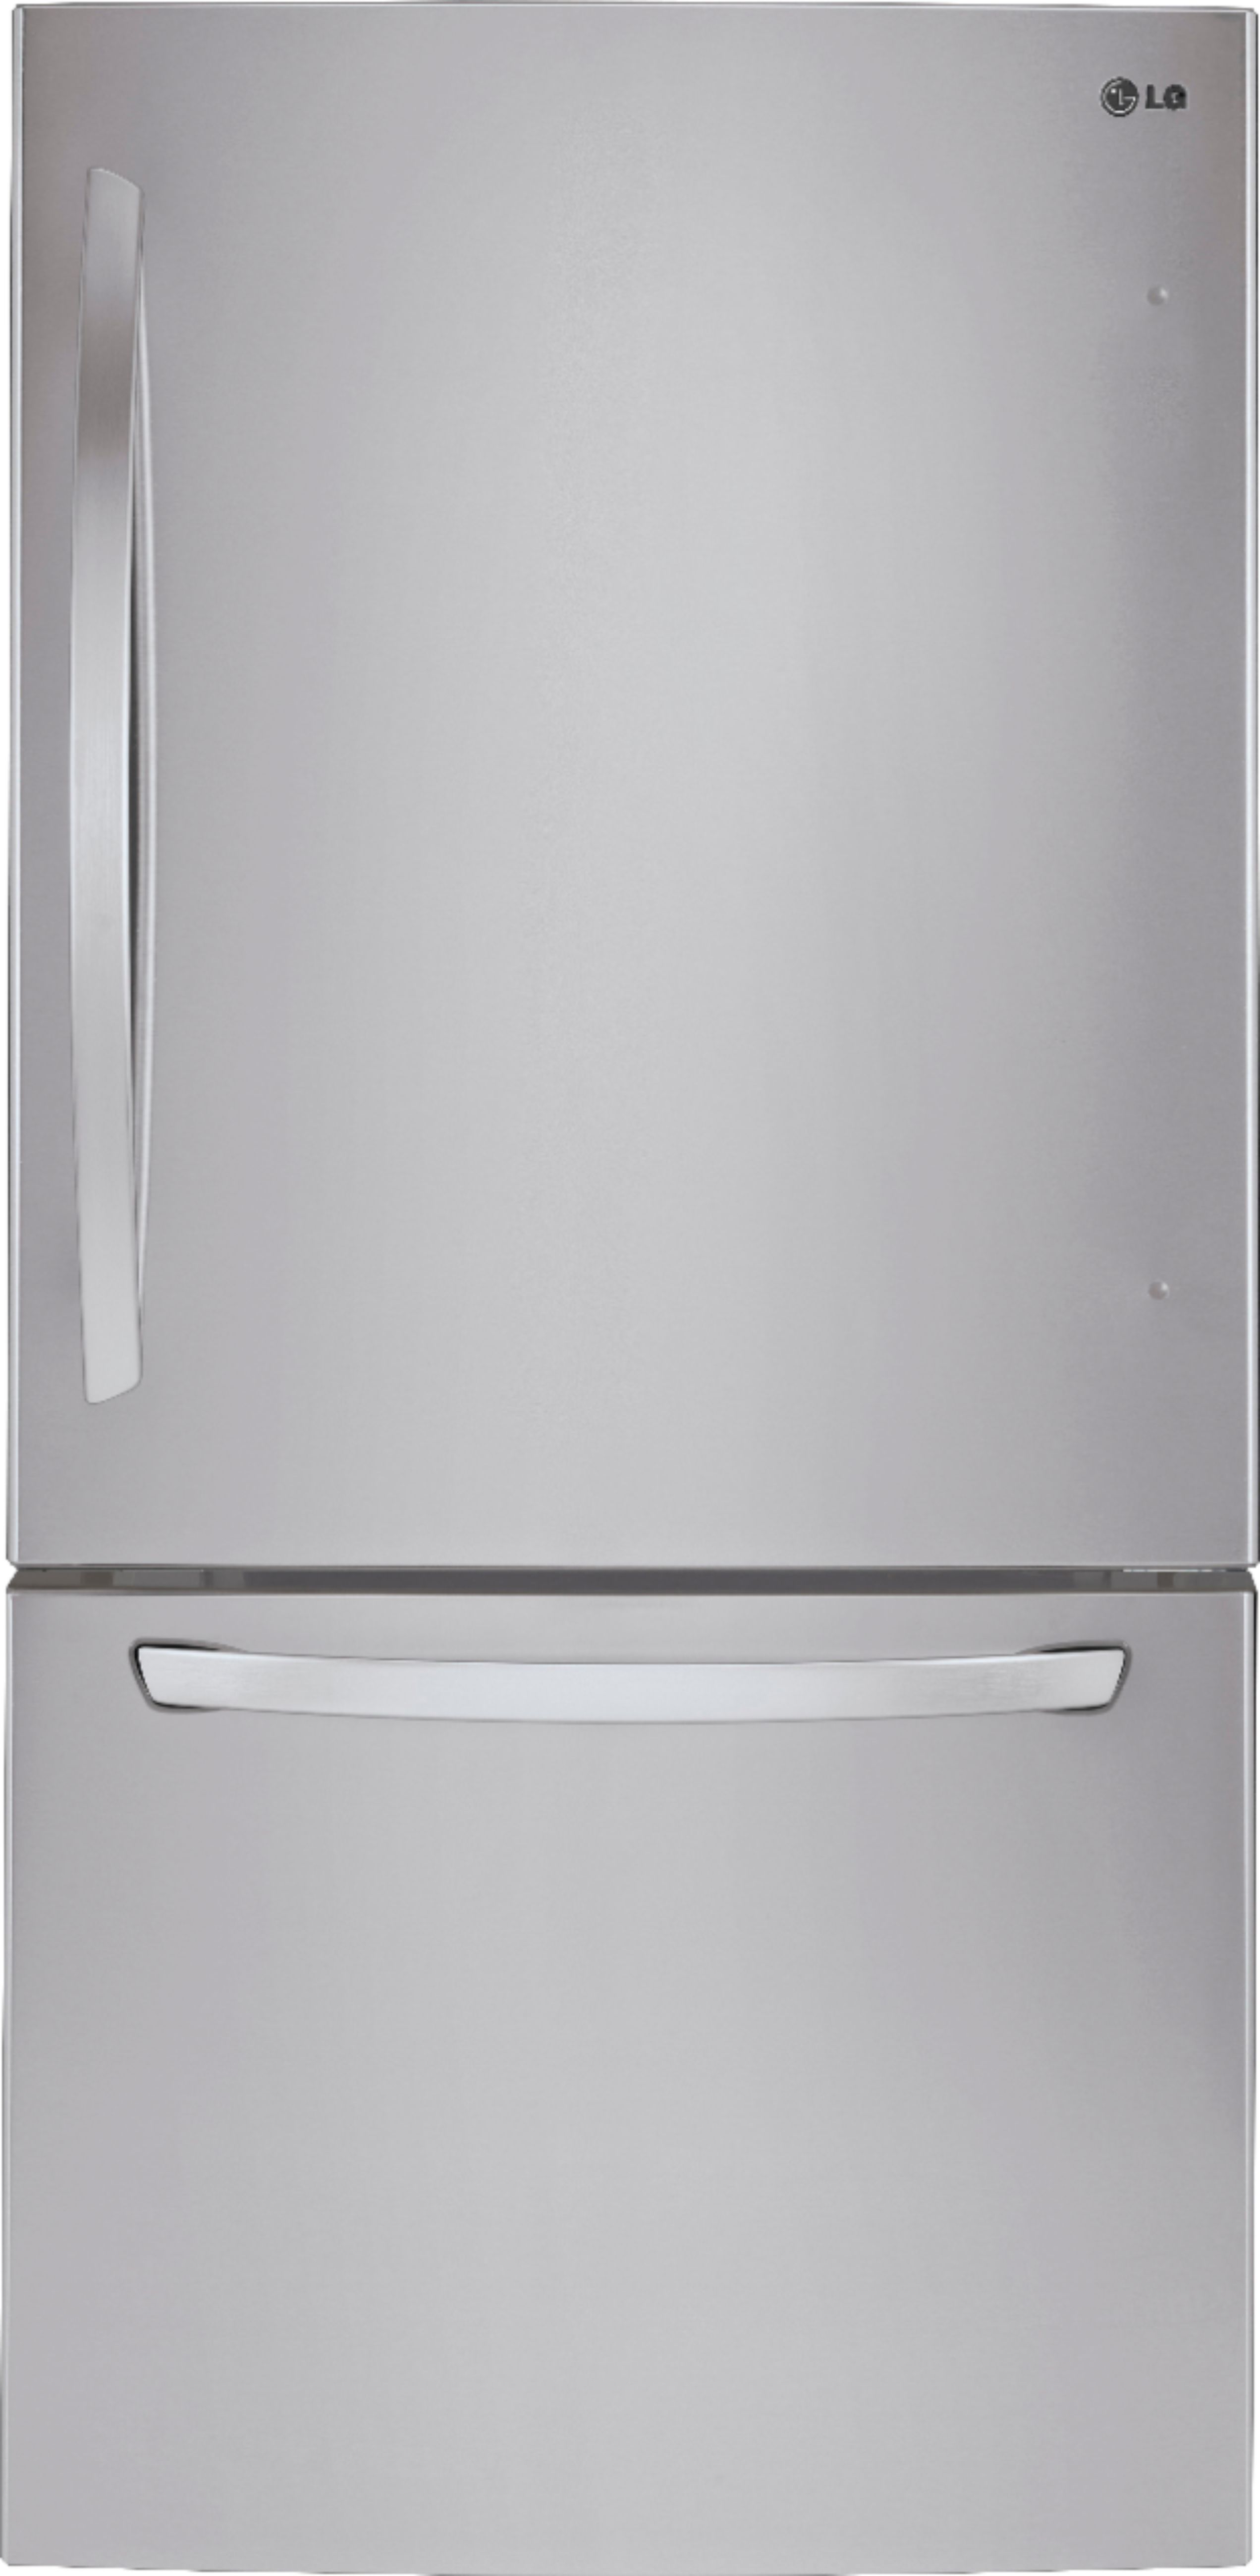 32+ Do bottom freezer refrigerators have more problems information